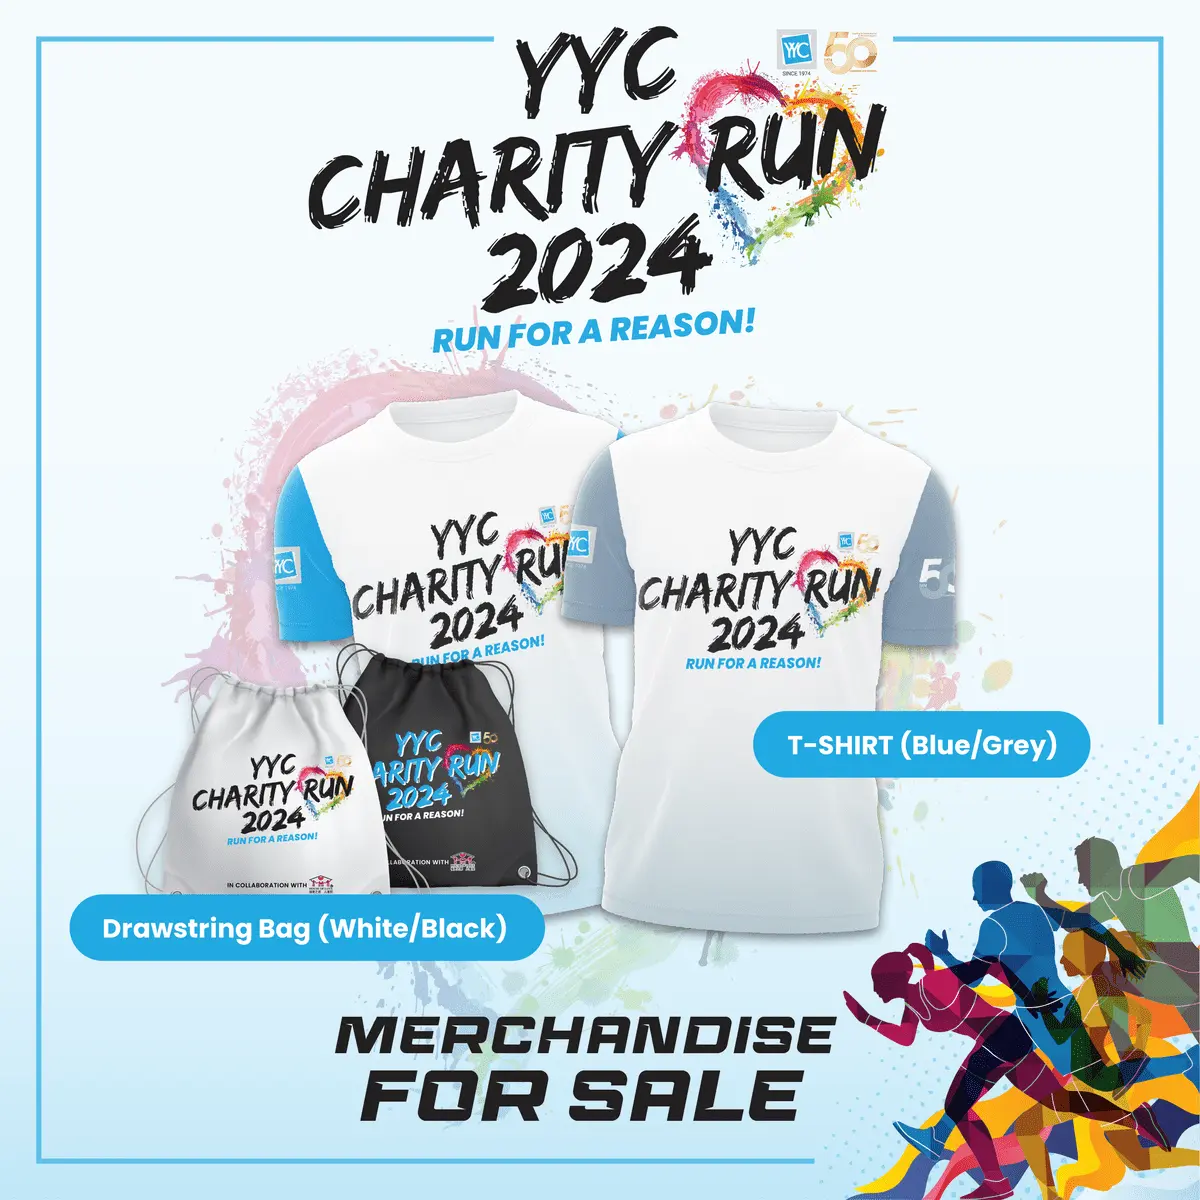 YYC Charity Run 2024 Merchandise Poster